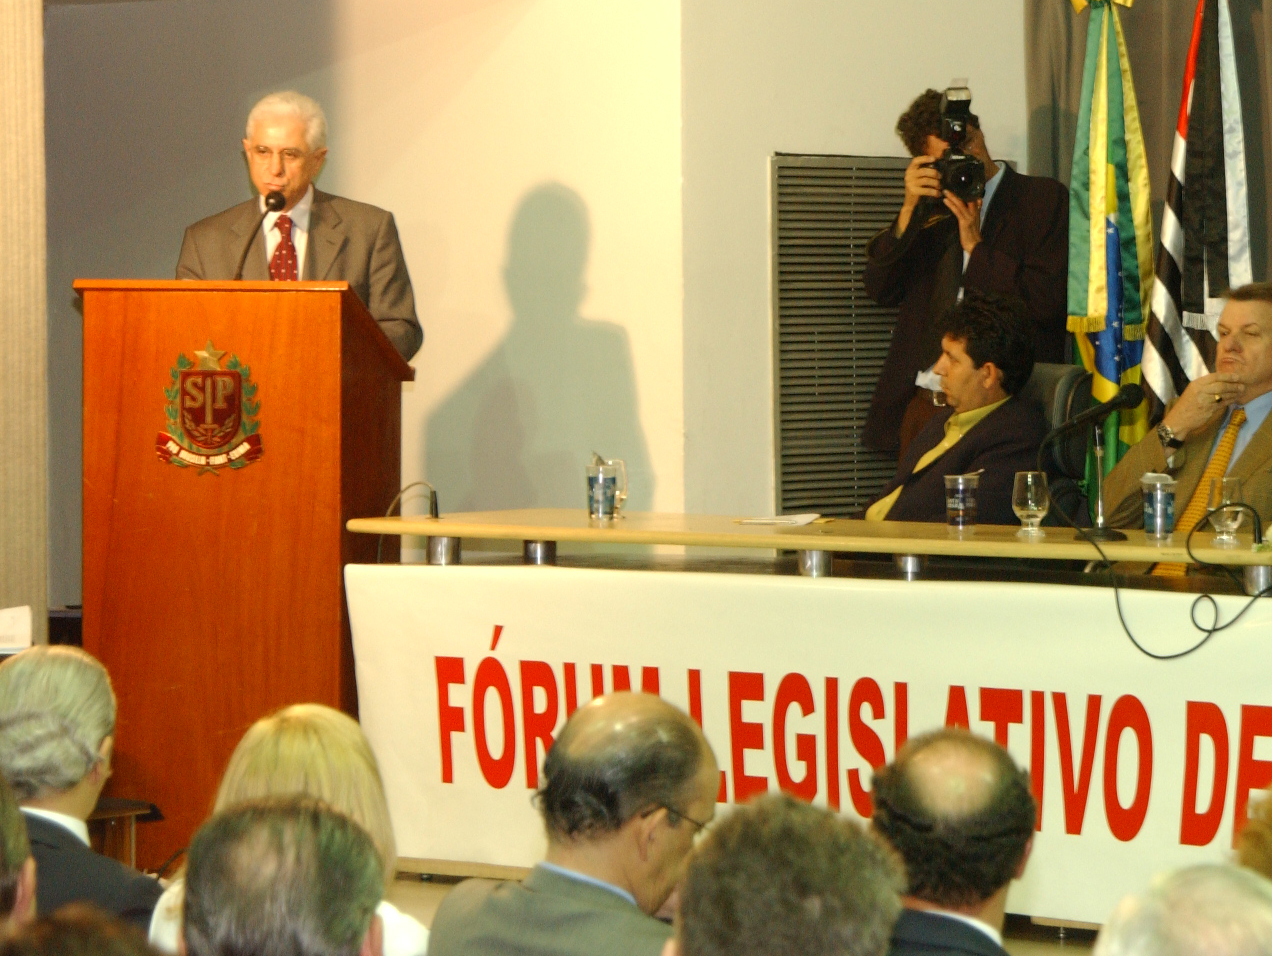 Presidente Sidney Beraldo discursa na tribuna do Frum <a style='float:right;color:#ccc' href='https://www3.al.sp.gov.br/repositorio/noticia/hist/BeraldoDiscurso.jpg' target=_blank><i class='bi bi-zoom-in'></i> Clique para ver a imagem </a>